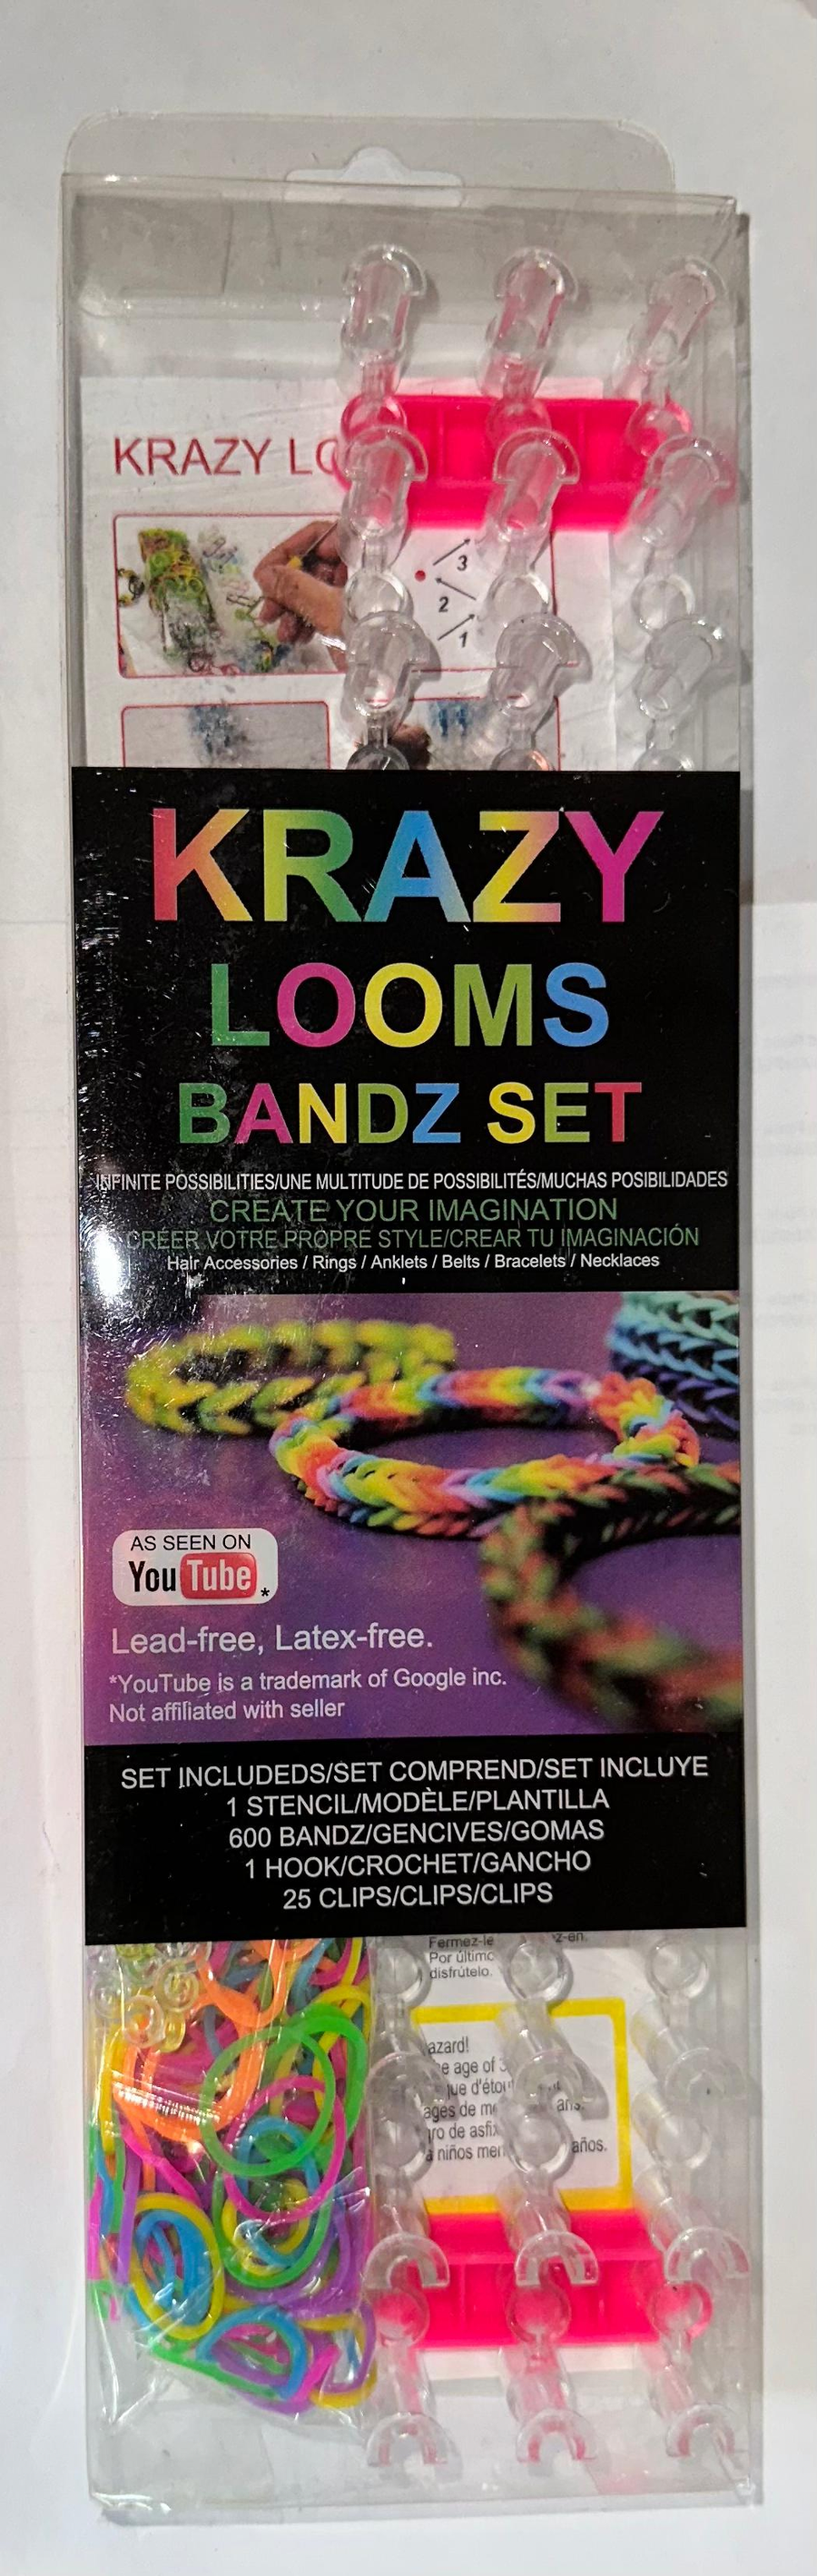 Krazy Looms Bandz Set - Quecan